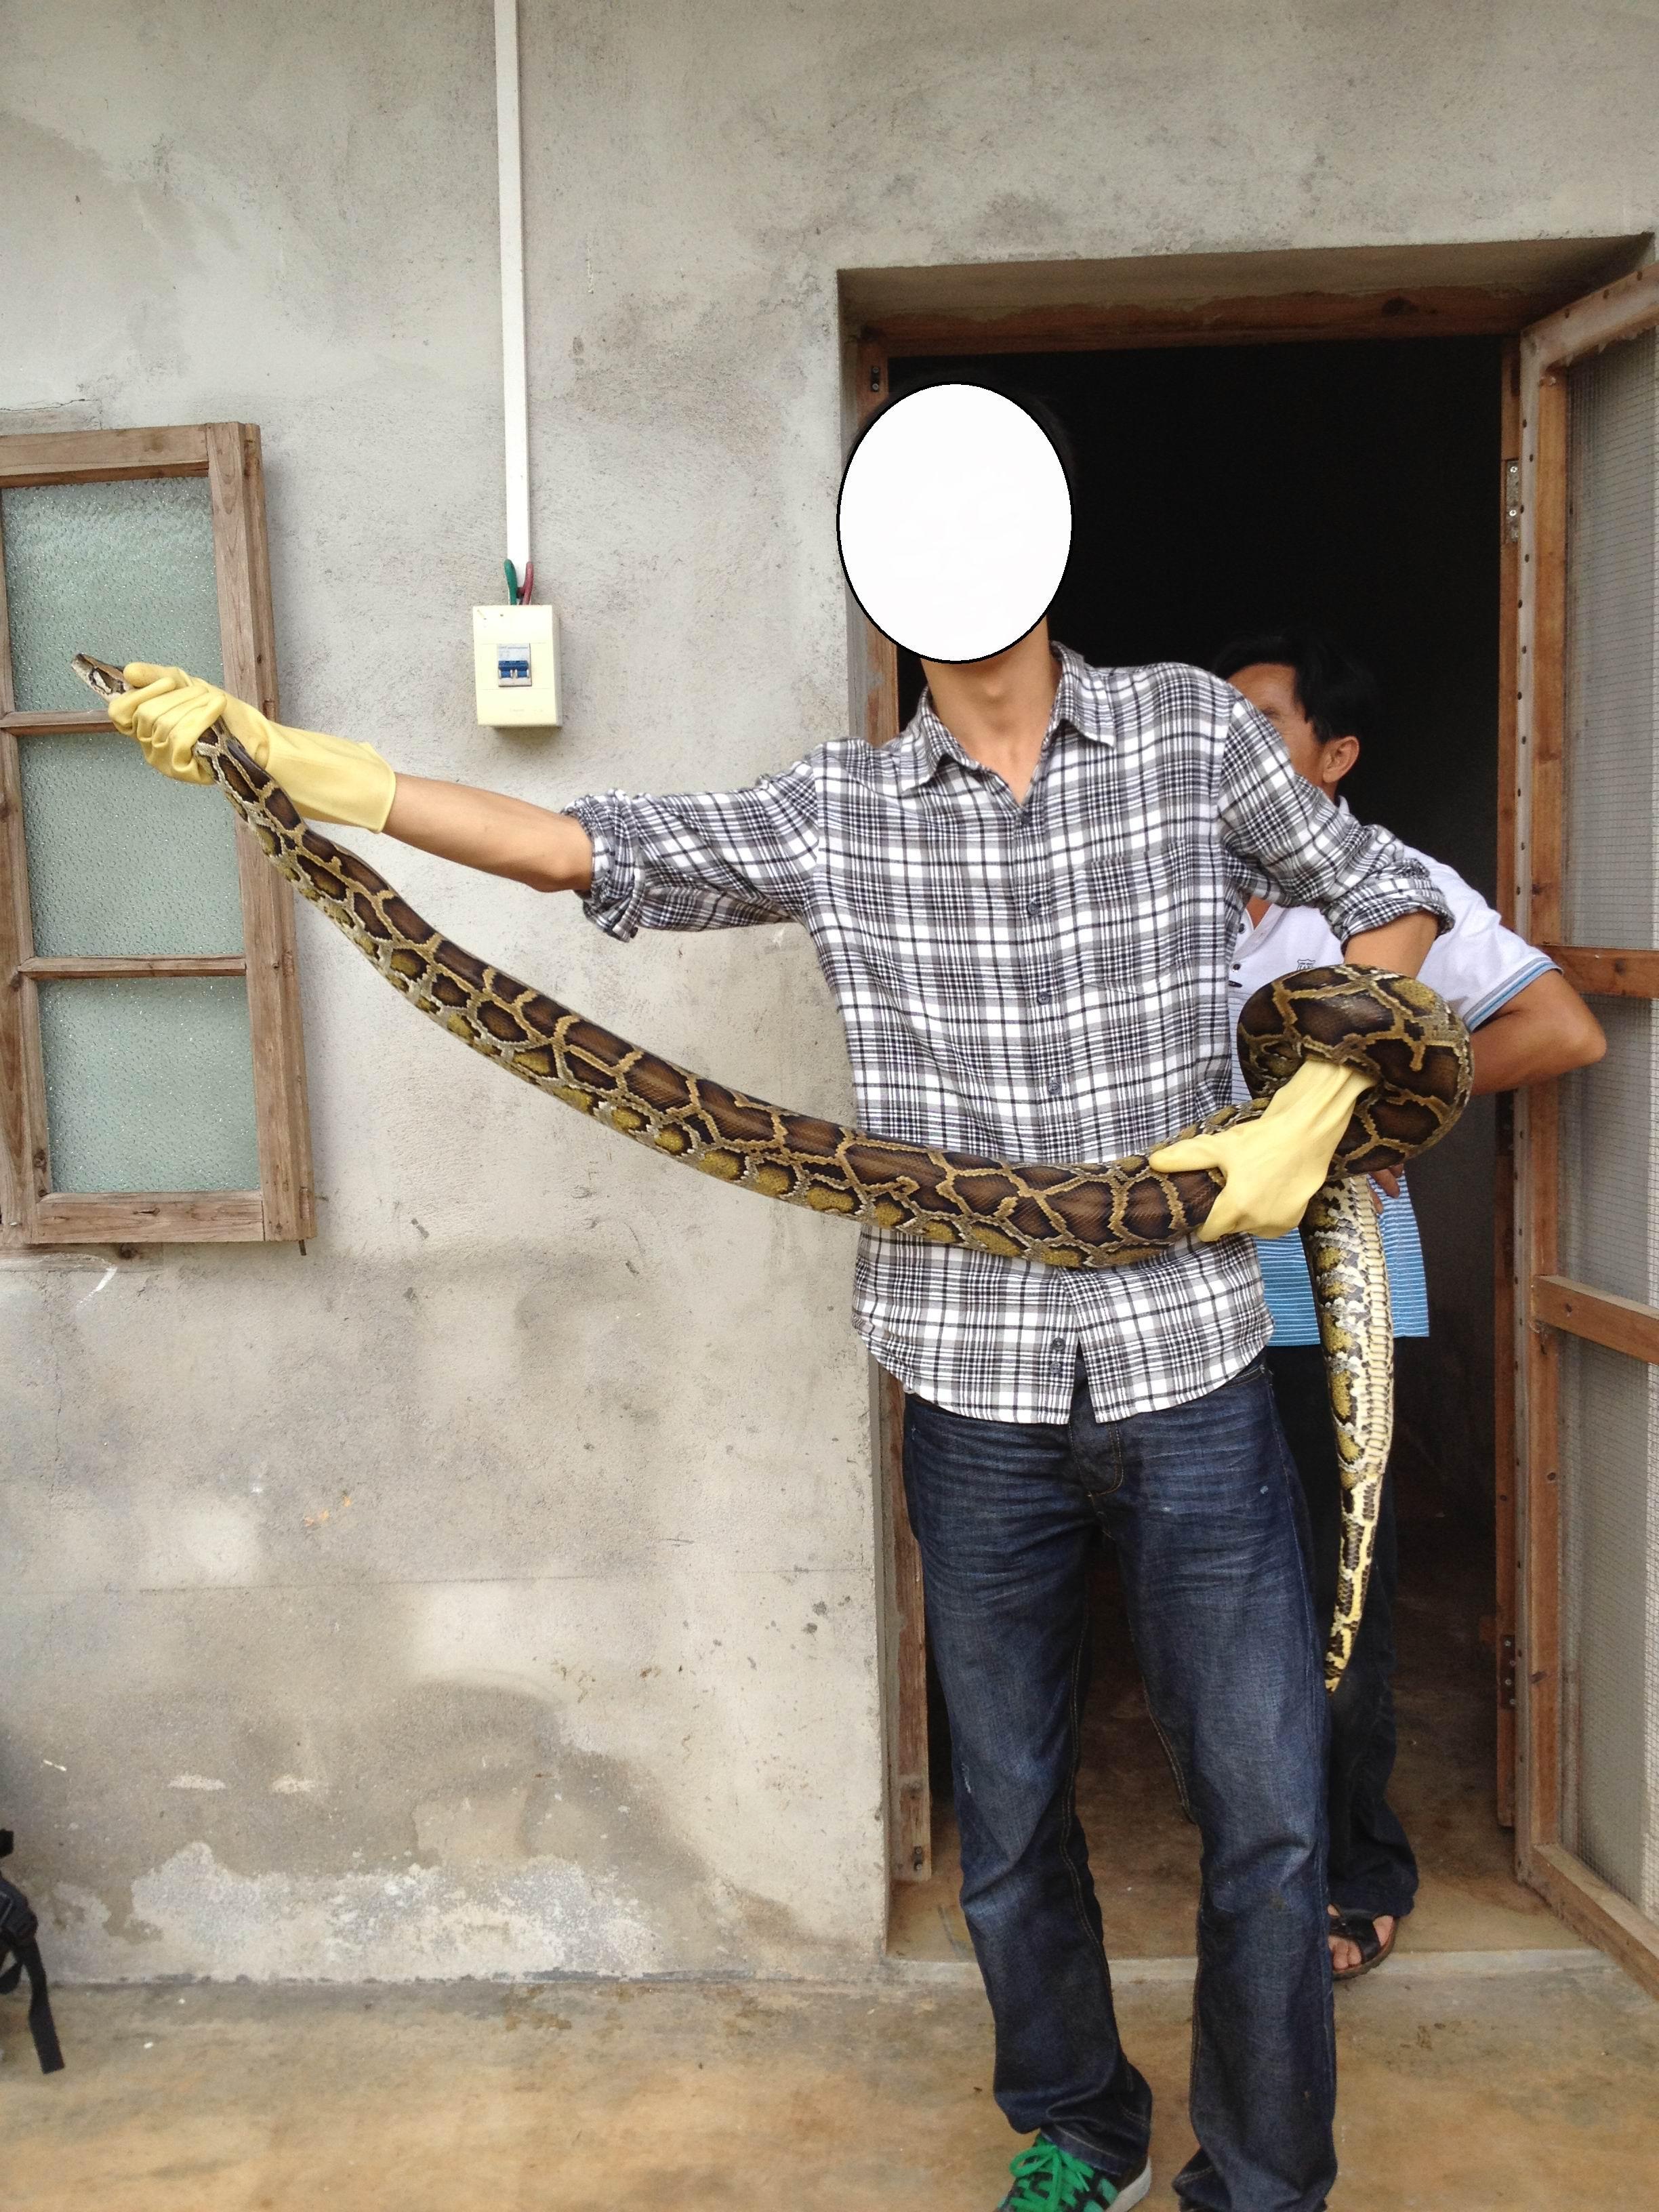 缅甸蟒Python bivittatus - 蟒蛇科普